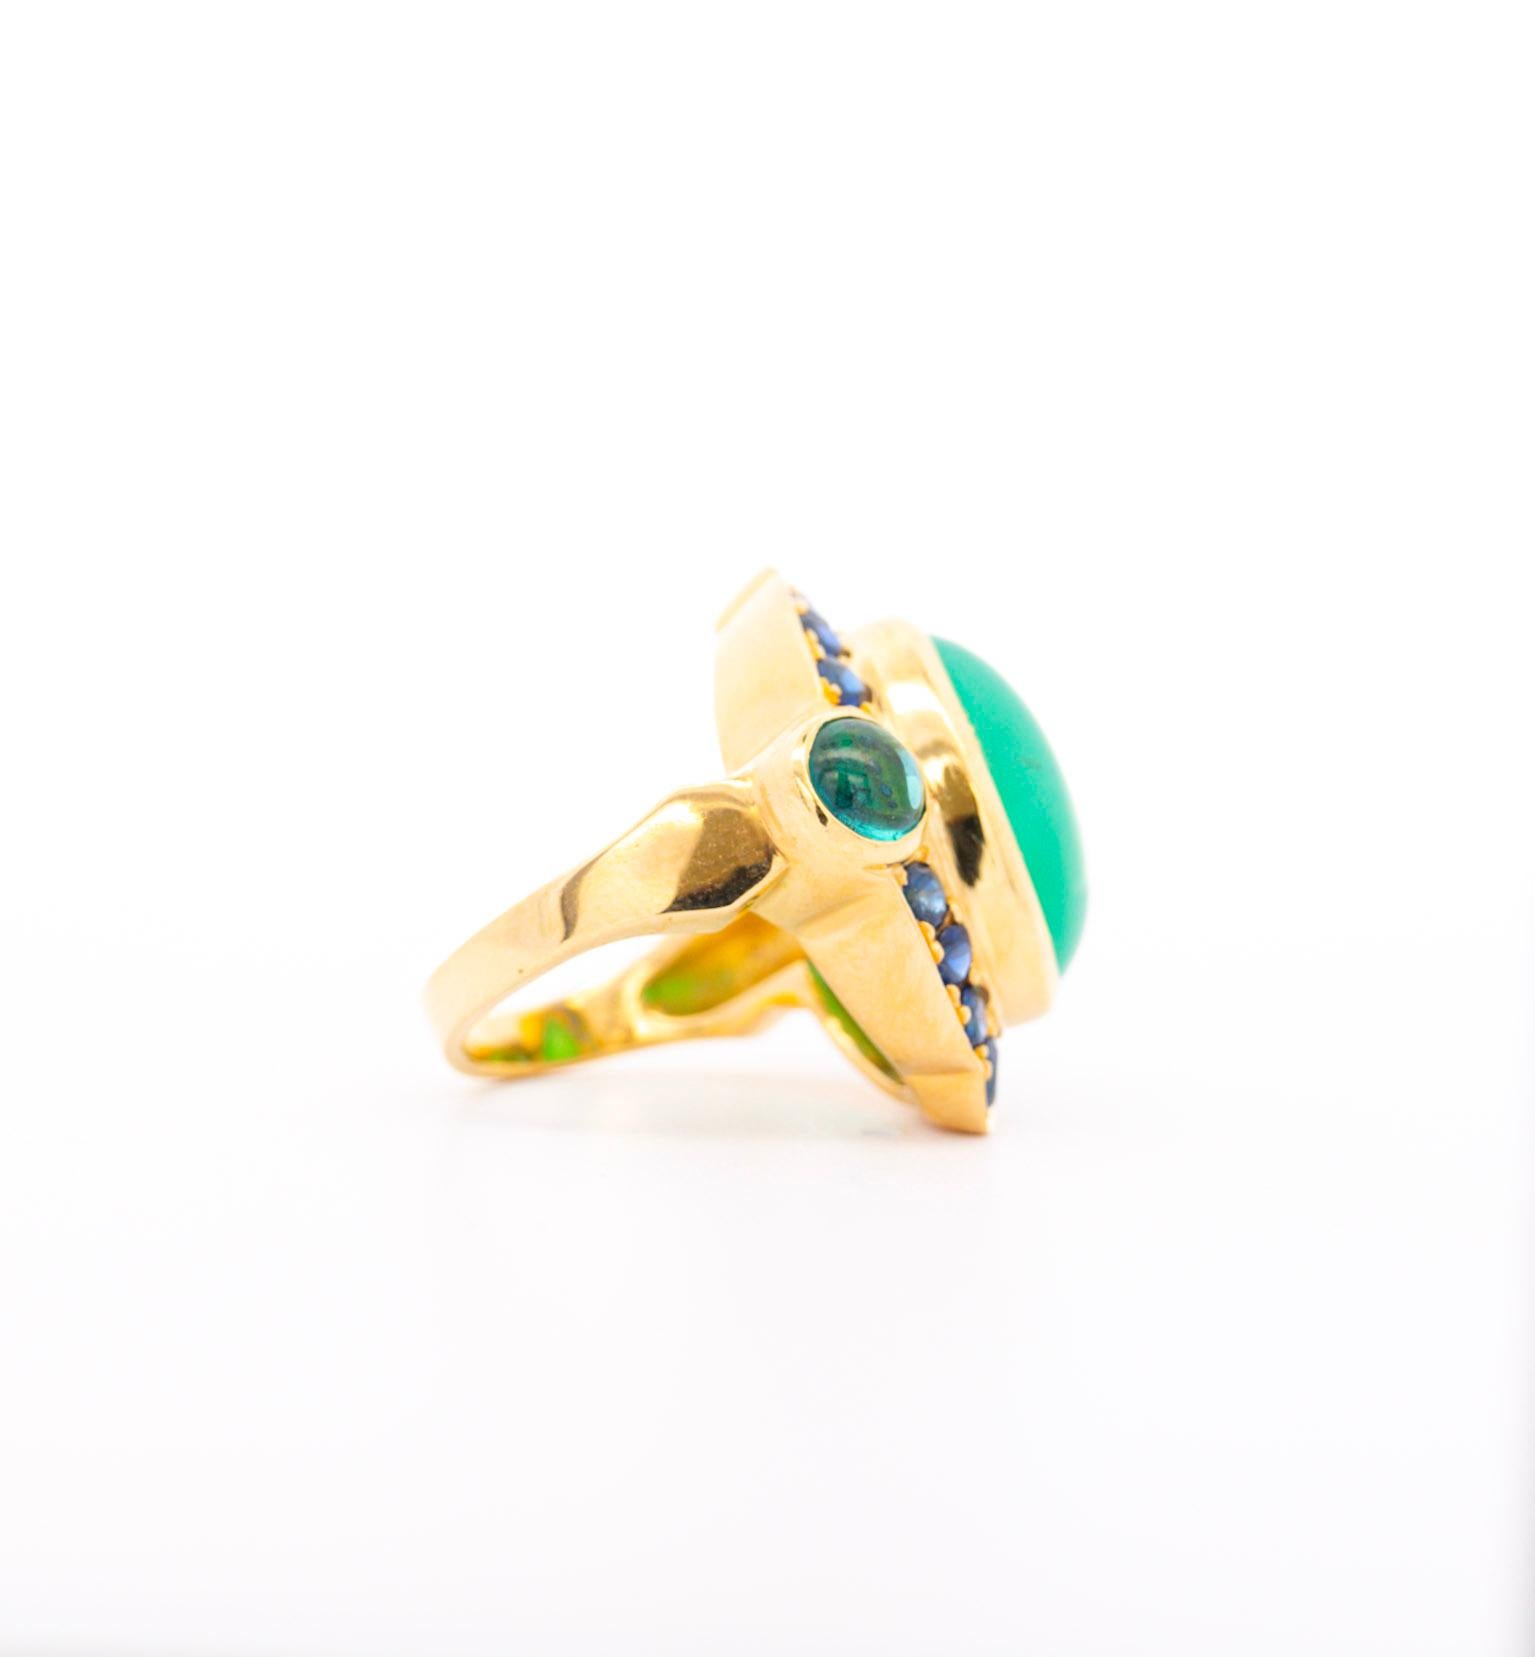 Artist Vintage 12 Carat Cabochon Cut Chalcedony Quartz & Sapphire Ring in 14K Gold Ring